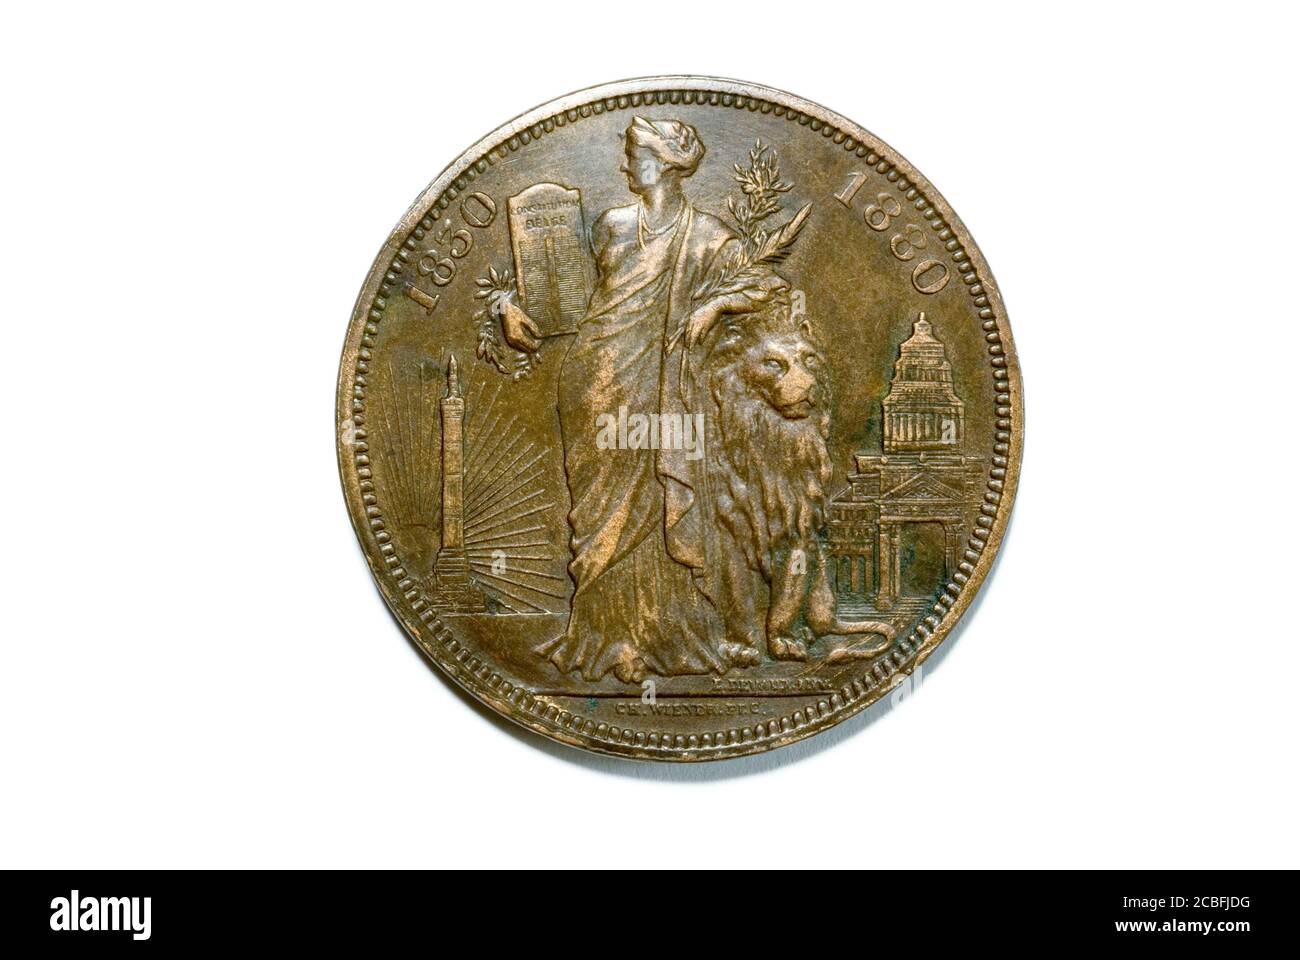 Belgium 50 years of independence medallion 1880 Stock Photo